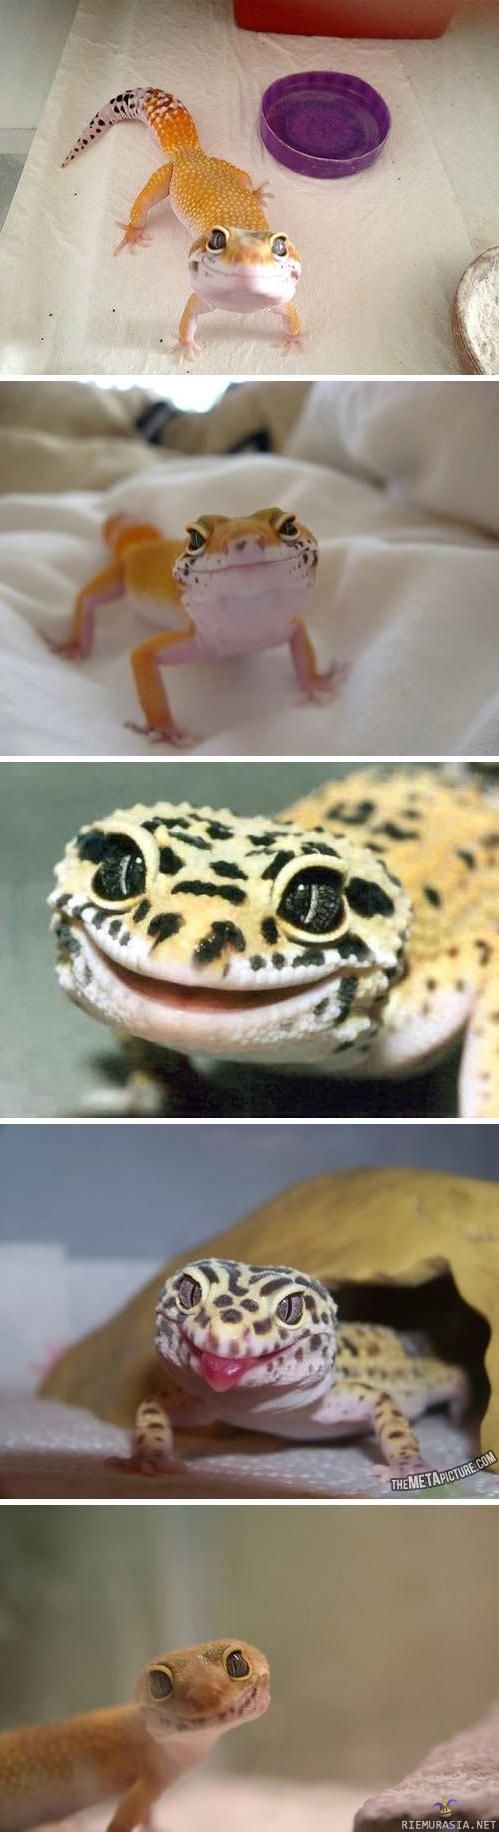 Iloinen gekko